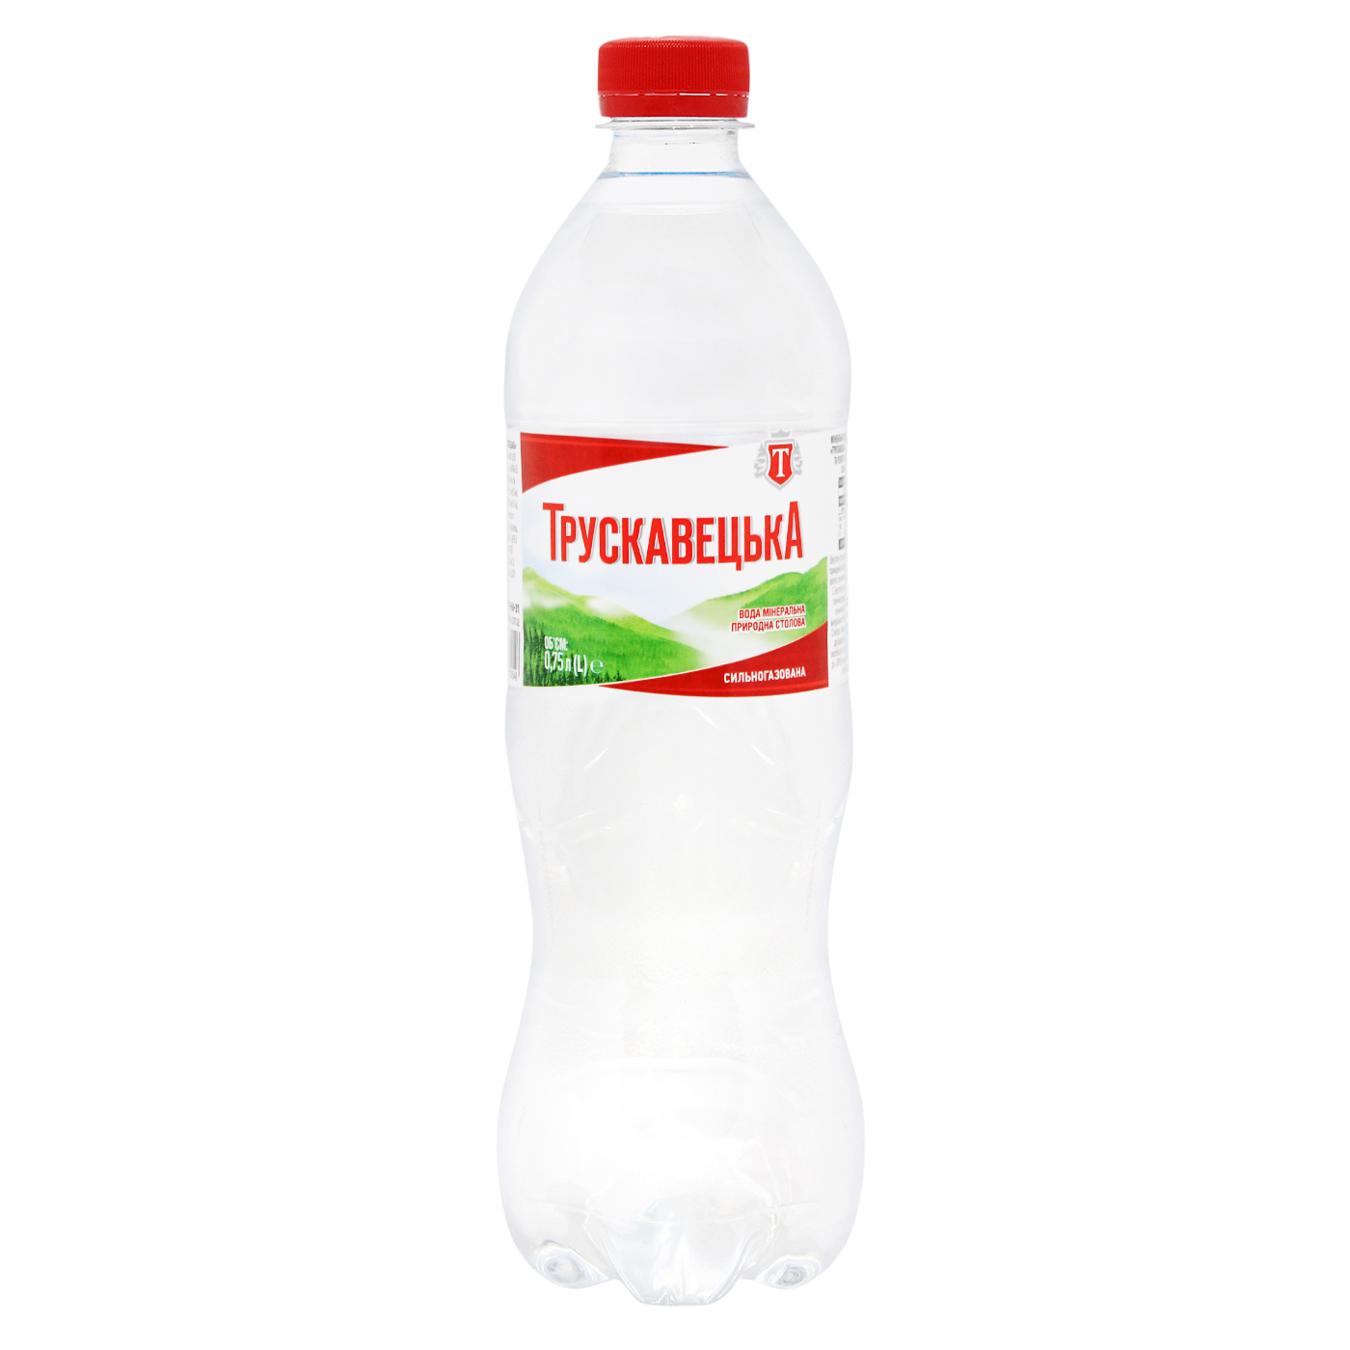 Truskavetska strongly carbonated water 0.75 l PET